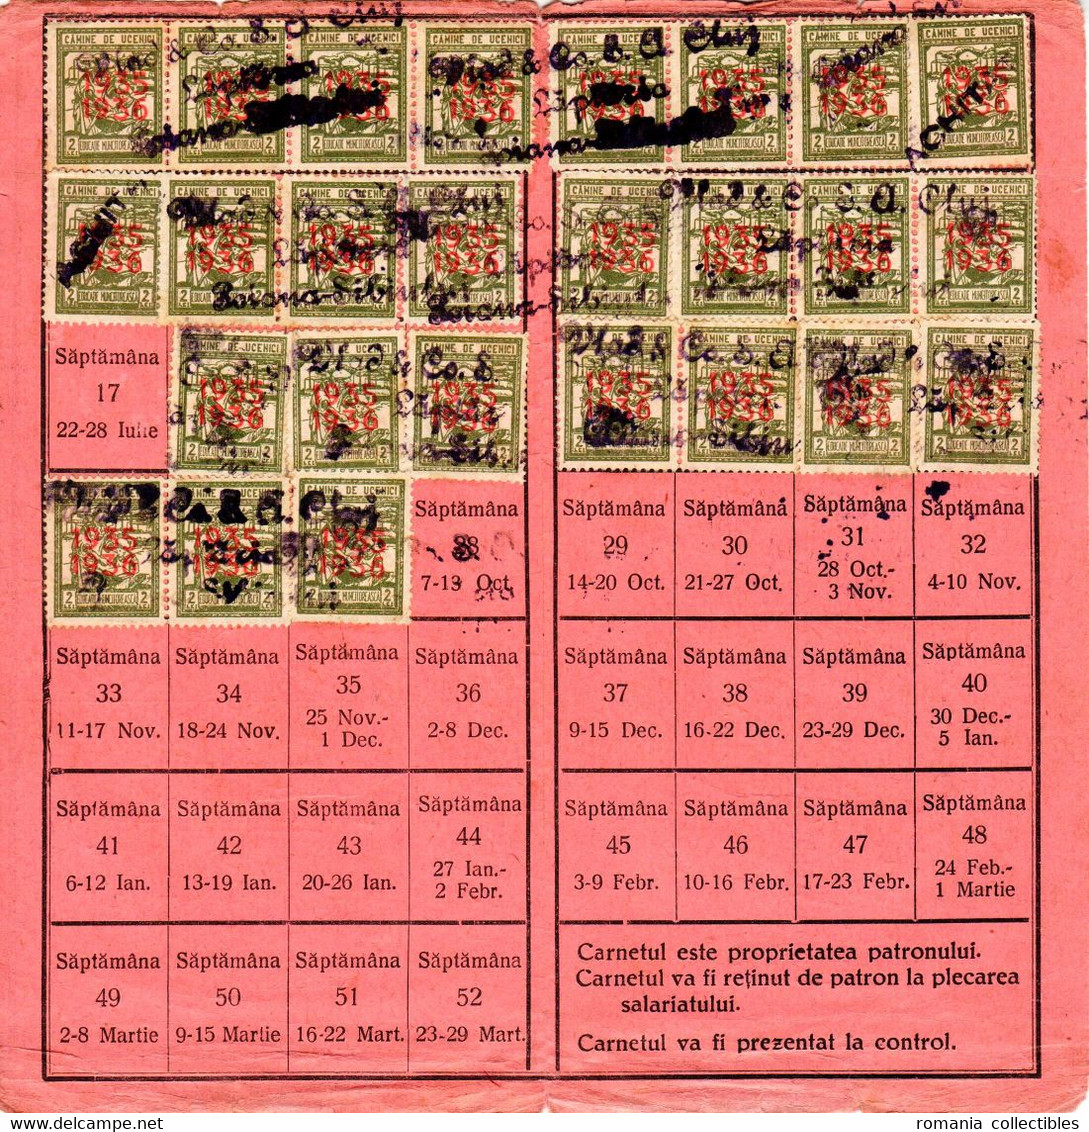 Romania, 1935/1936, Social Insurance Ticket - Revenue Fiscal Stamps / Cinderellas - Fiscale Zegels